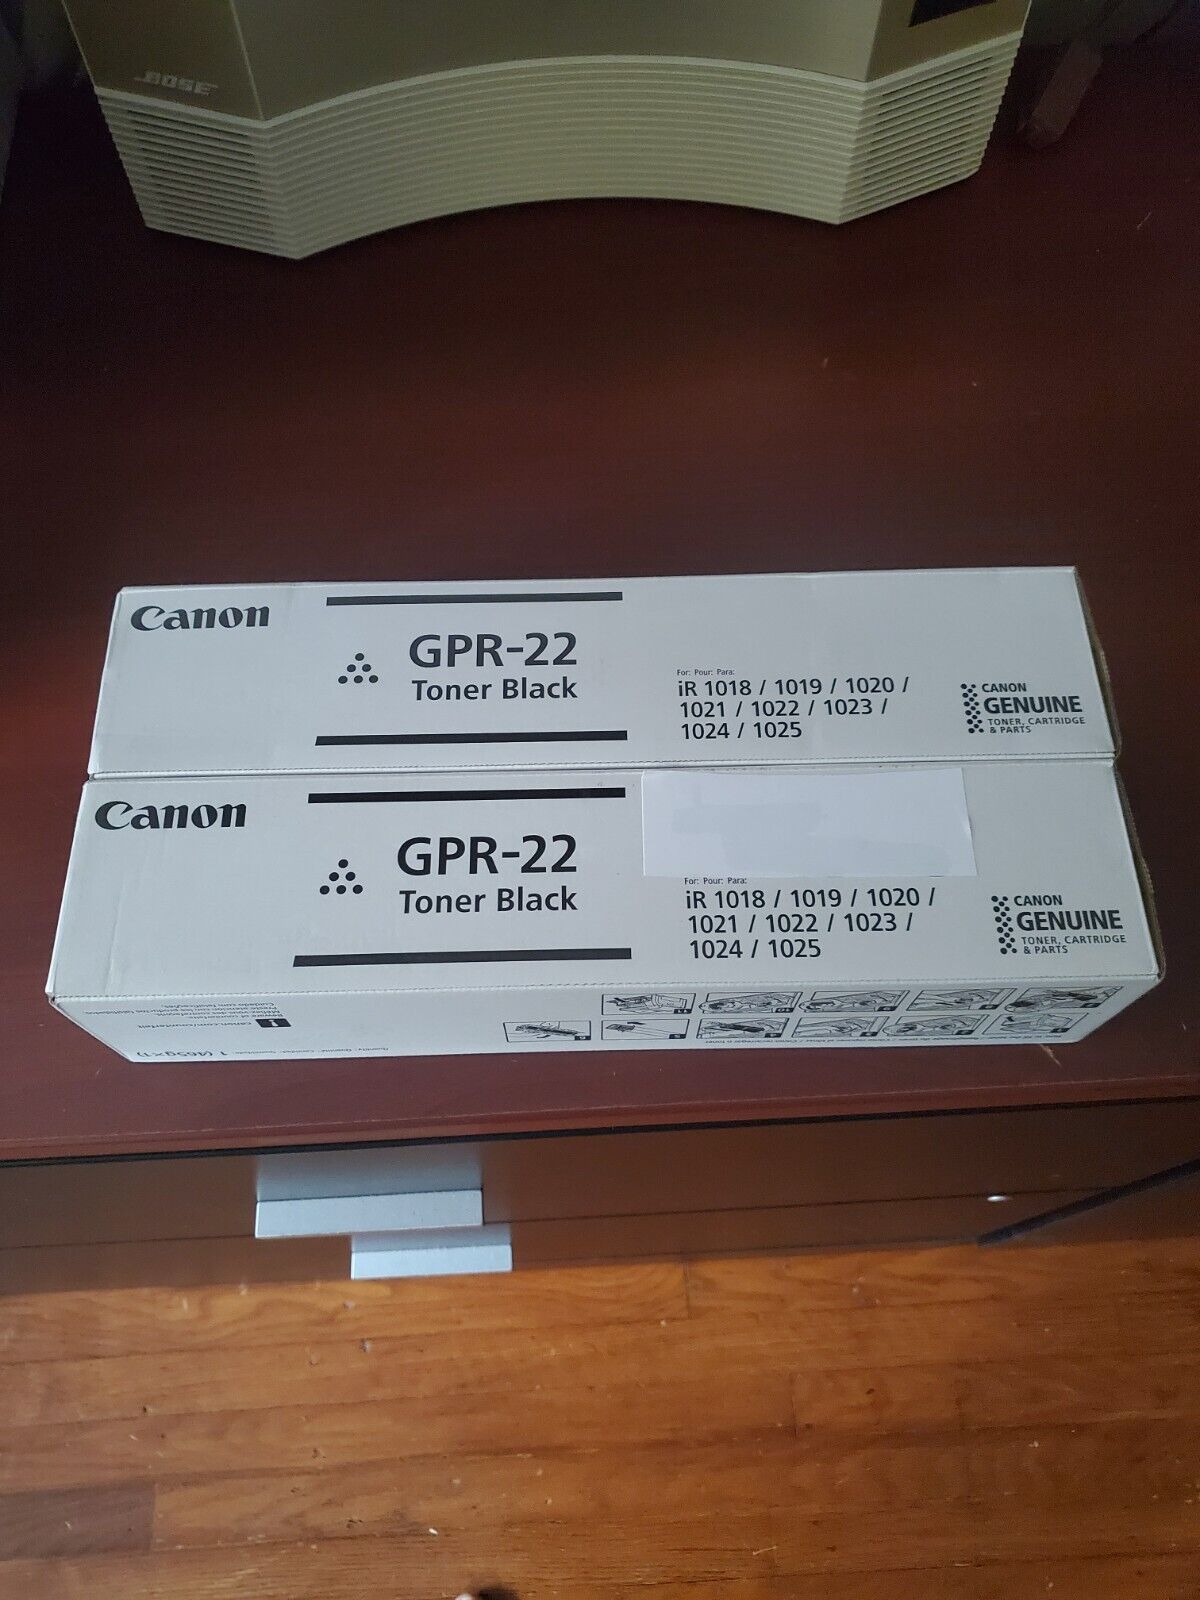 QTY 2  Genuine Canon GPR-22 Black Toner  0386B003AA  New Factory Sealed Box